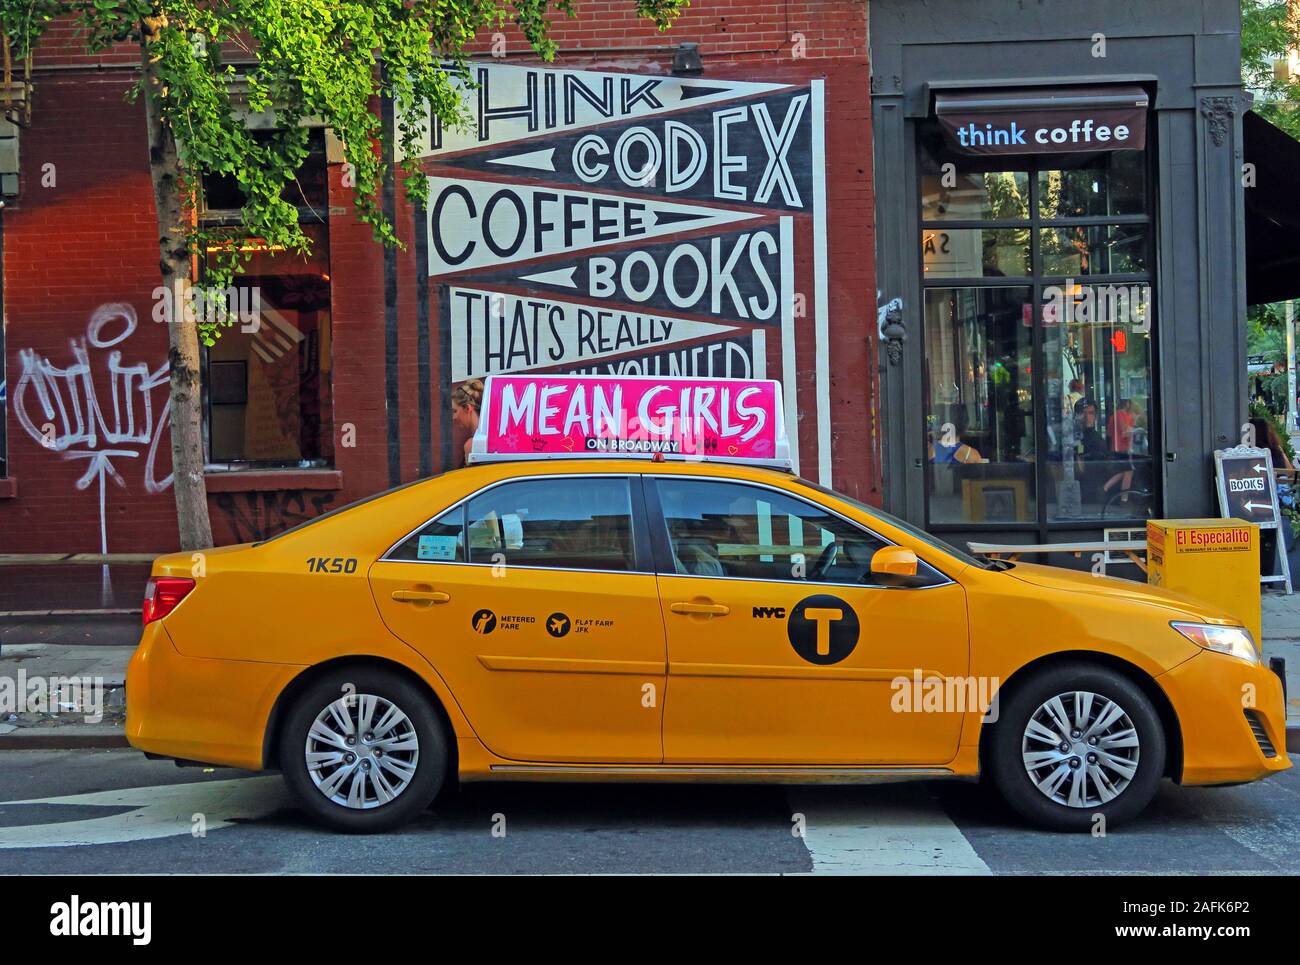 Taxi giallo NYC, 1K50, Think Coffee, Think, Codex, caffè, libri, Mean Girls, Taxi driver, Manhattan, New York, New York City, NY, state, Stati Uniti, USA Foto Stock